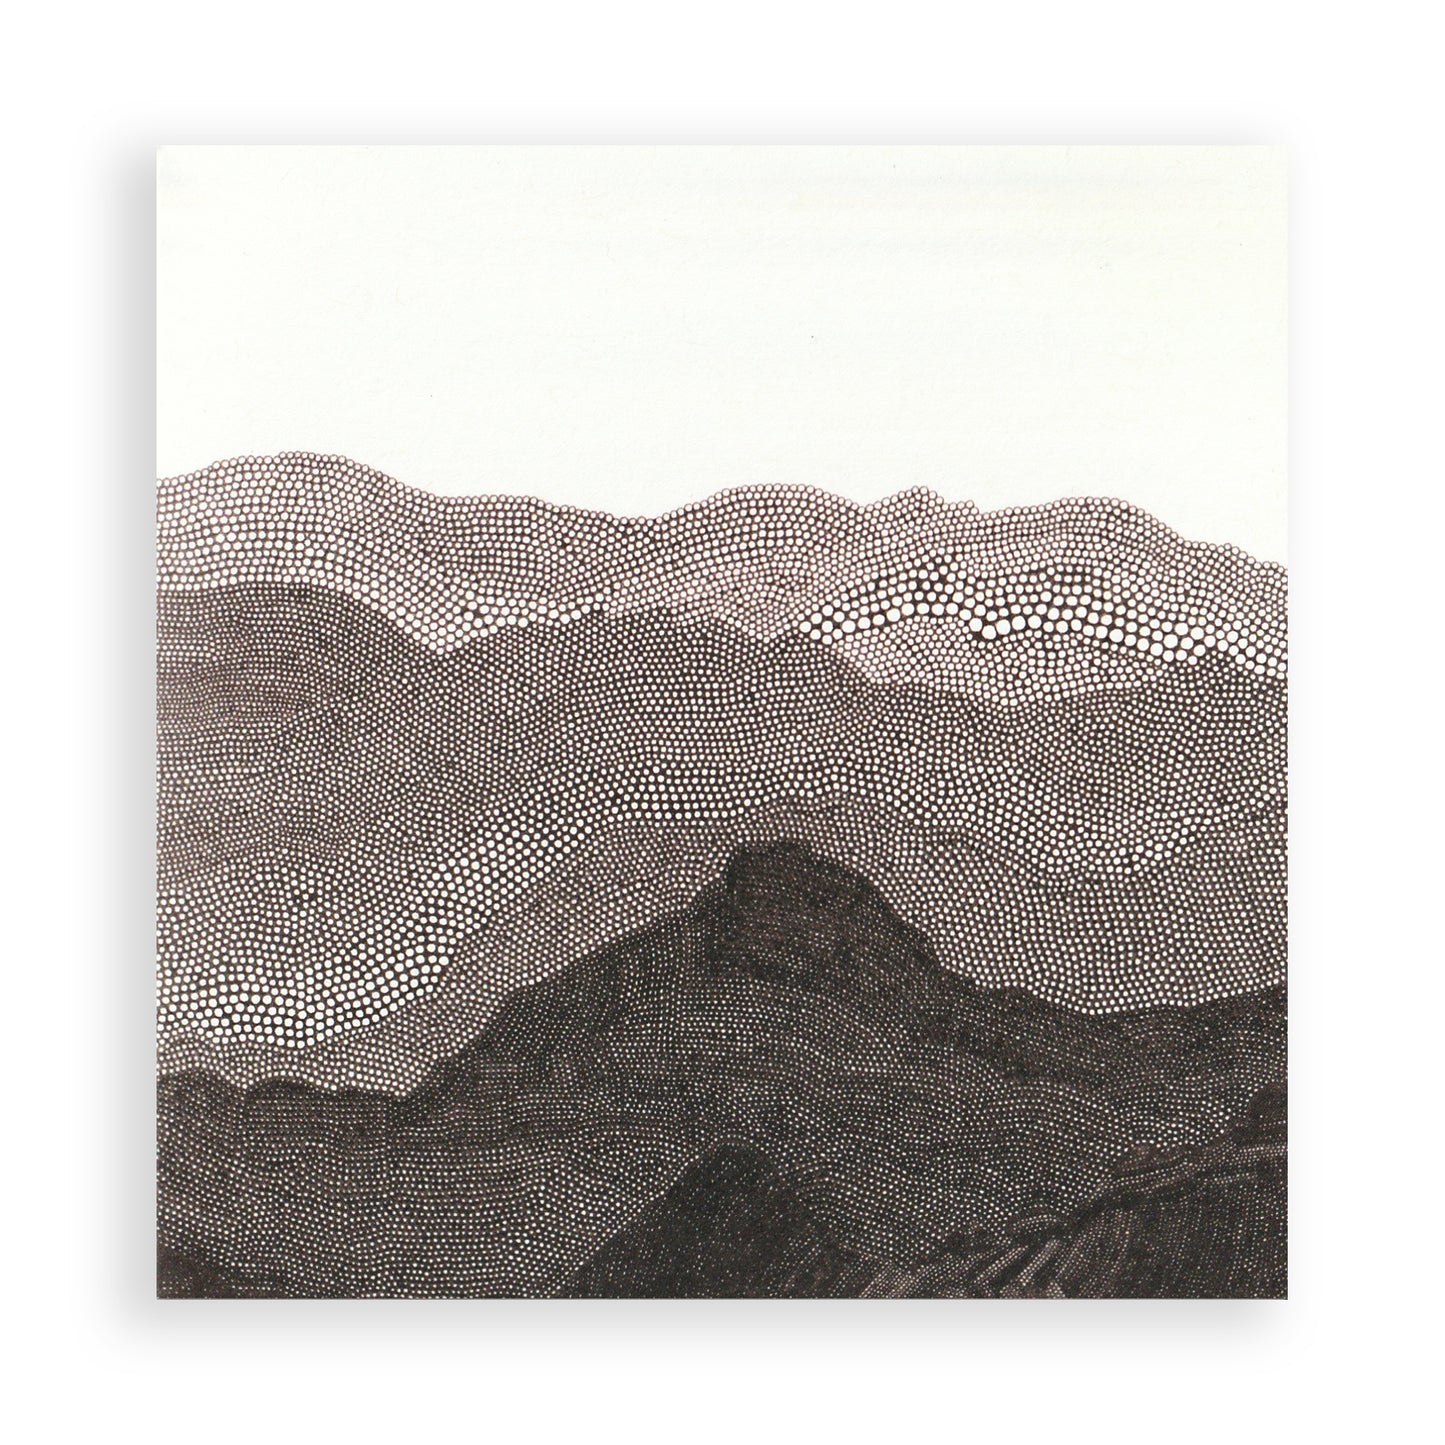 Mountains in Korea 2022_03 Art Card Print